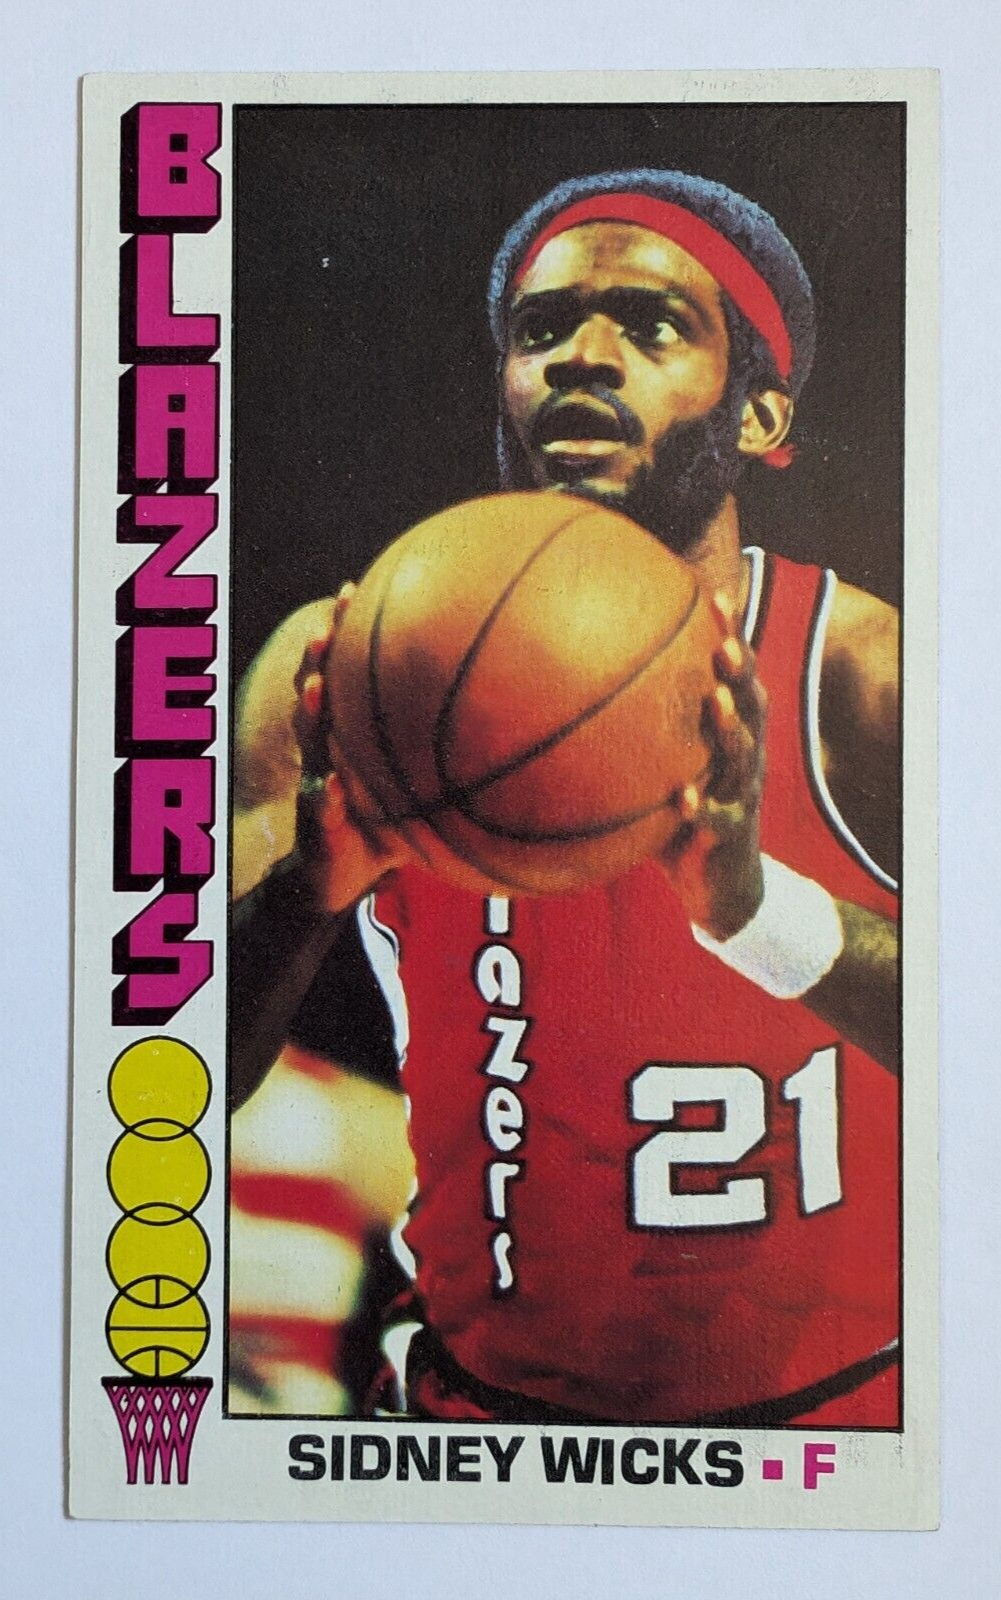 1969 SIDNEY WICKS OVERSIZED TOPPS NBA BASKETBALL CARD 31 PORTLAND TRAIL BLAZERS - $5.99